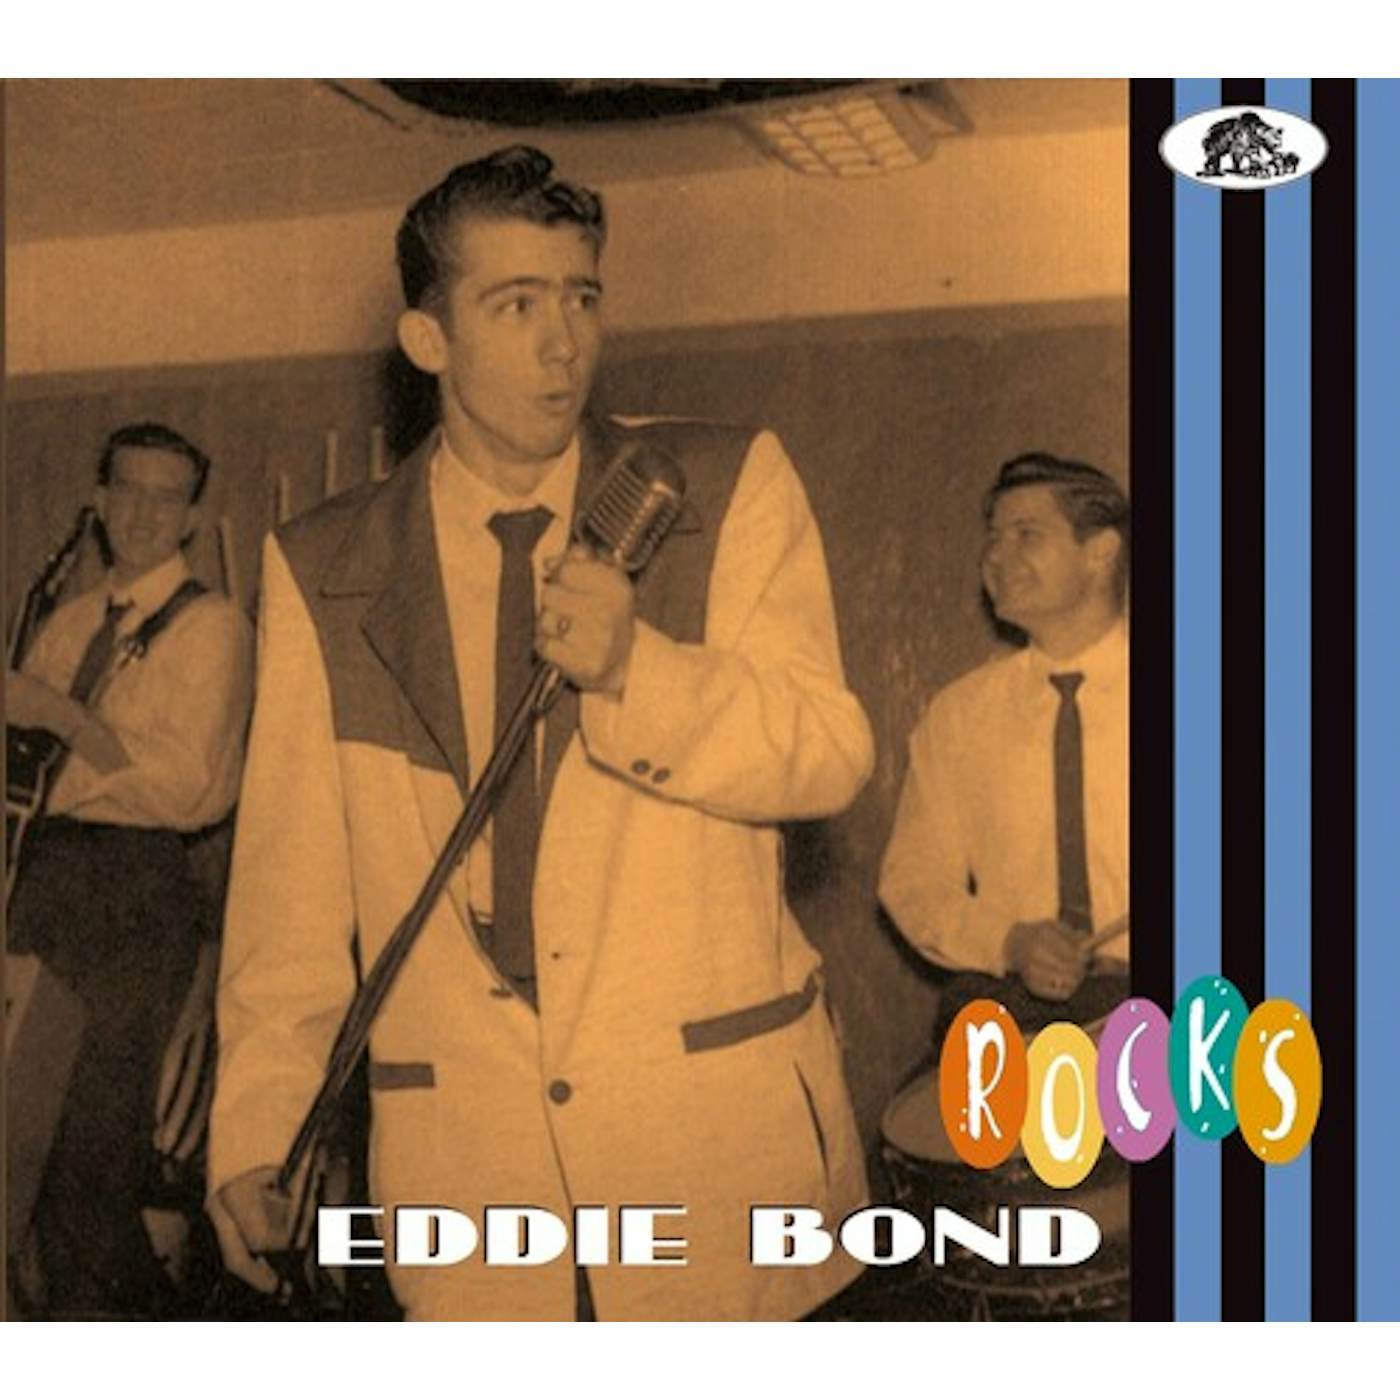 Eddie Bond ROCKS CD